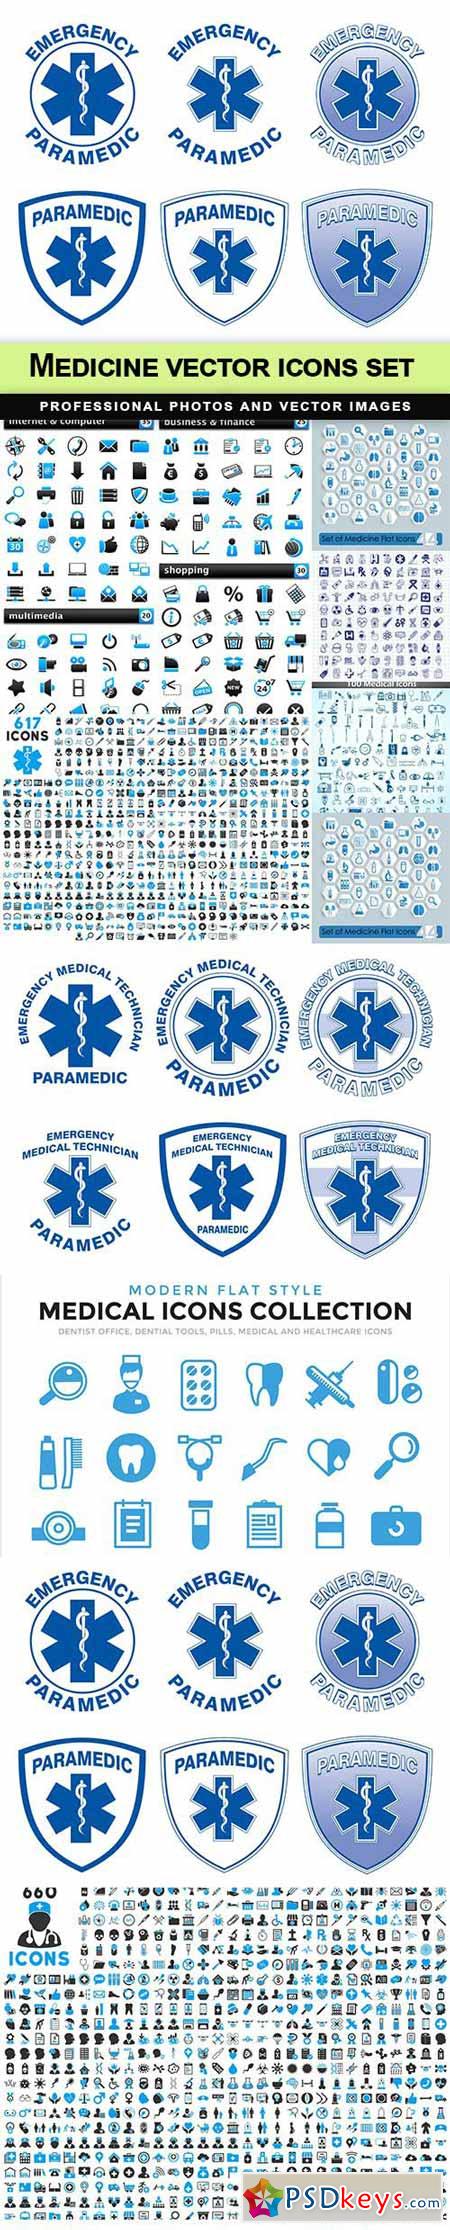 Medicine vector icons set - 10 EPS